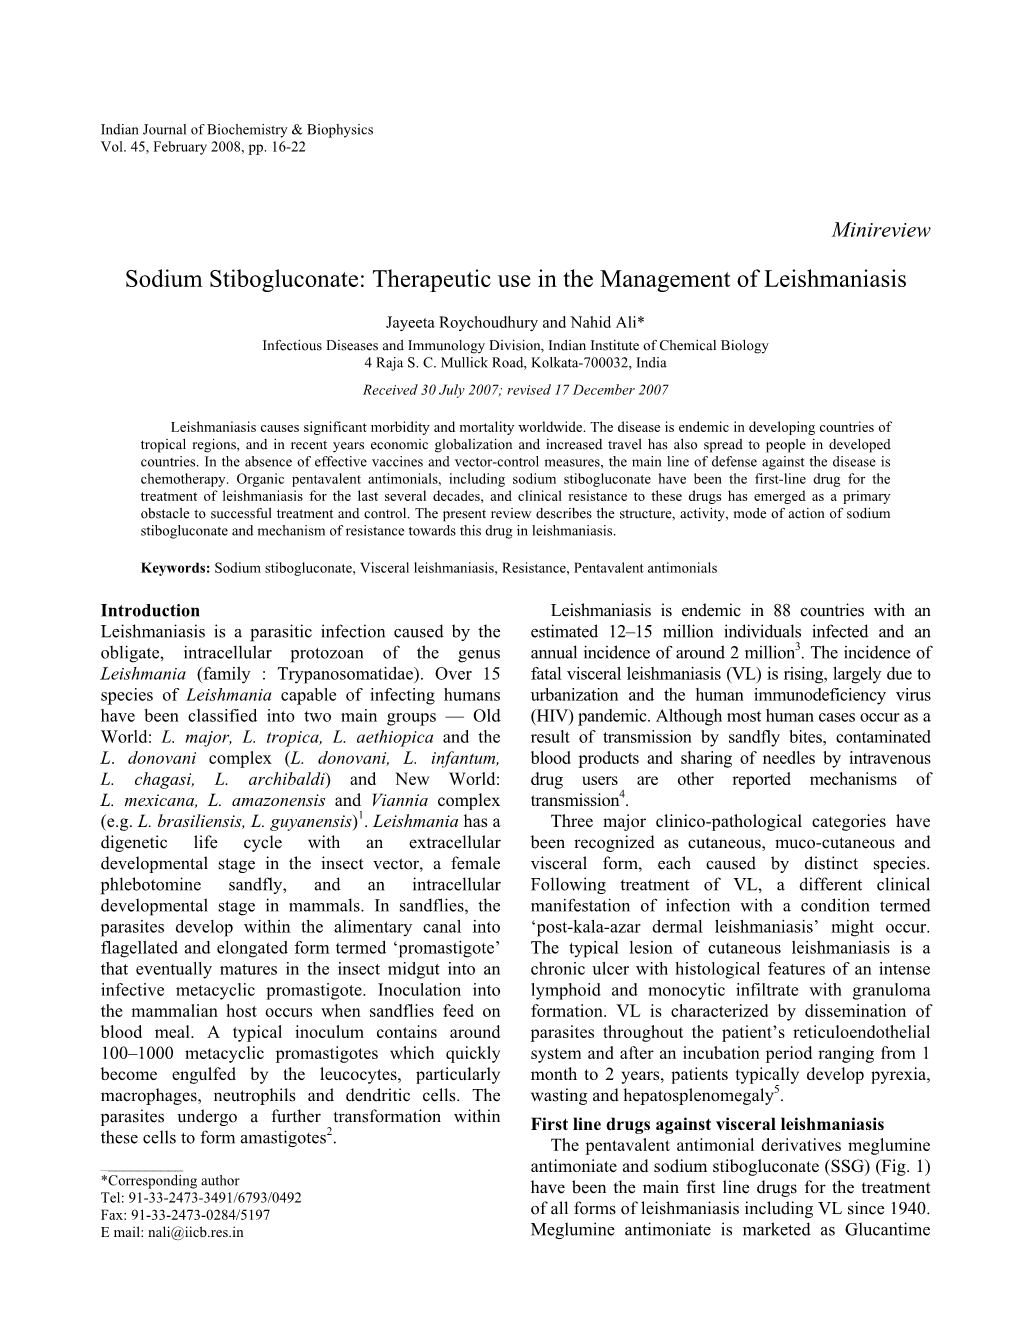 Sodium Stibogluconate: Therapeutic Use in the Management of Leishmaniasis